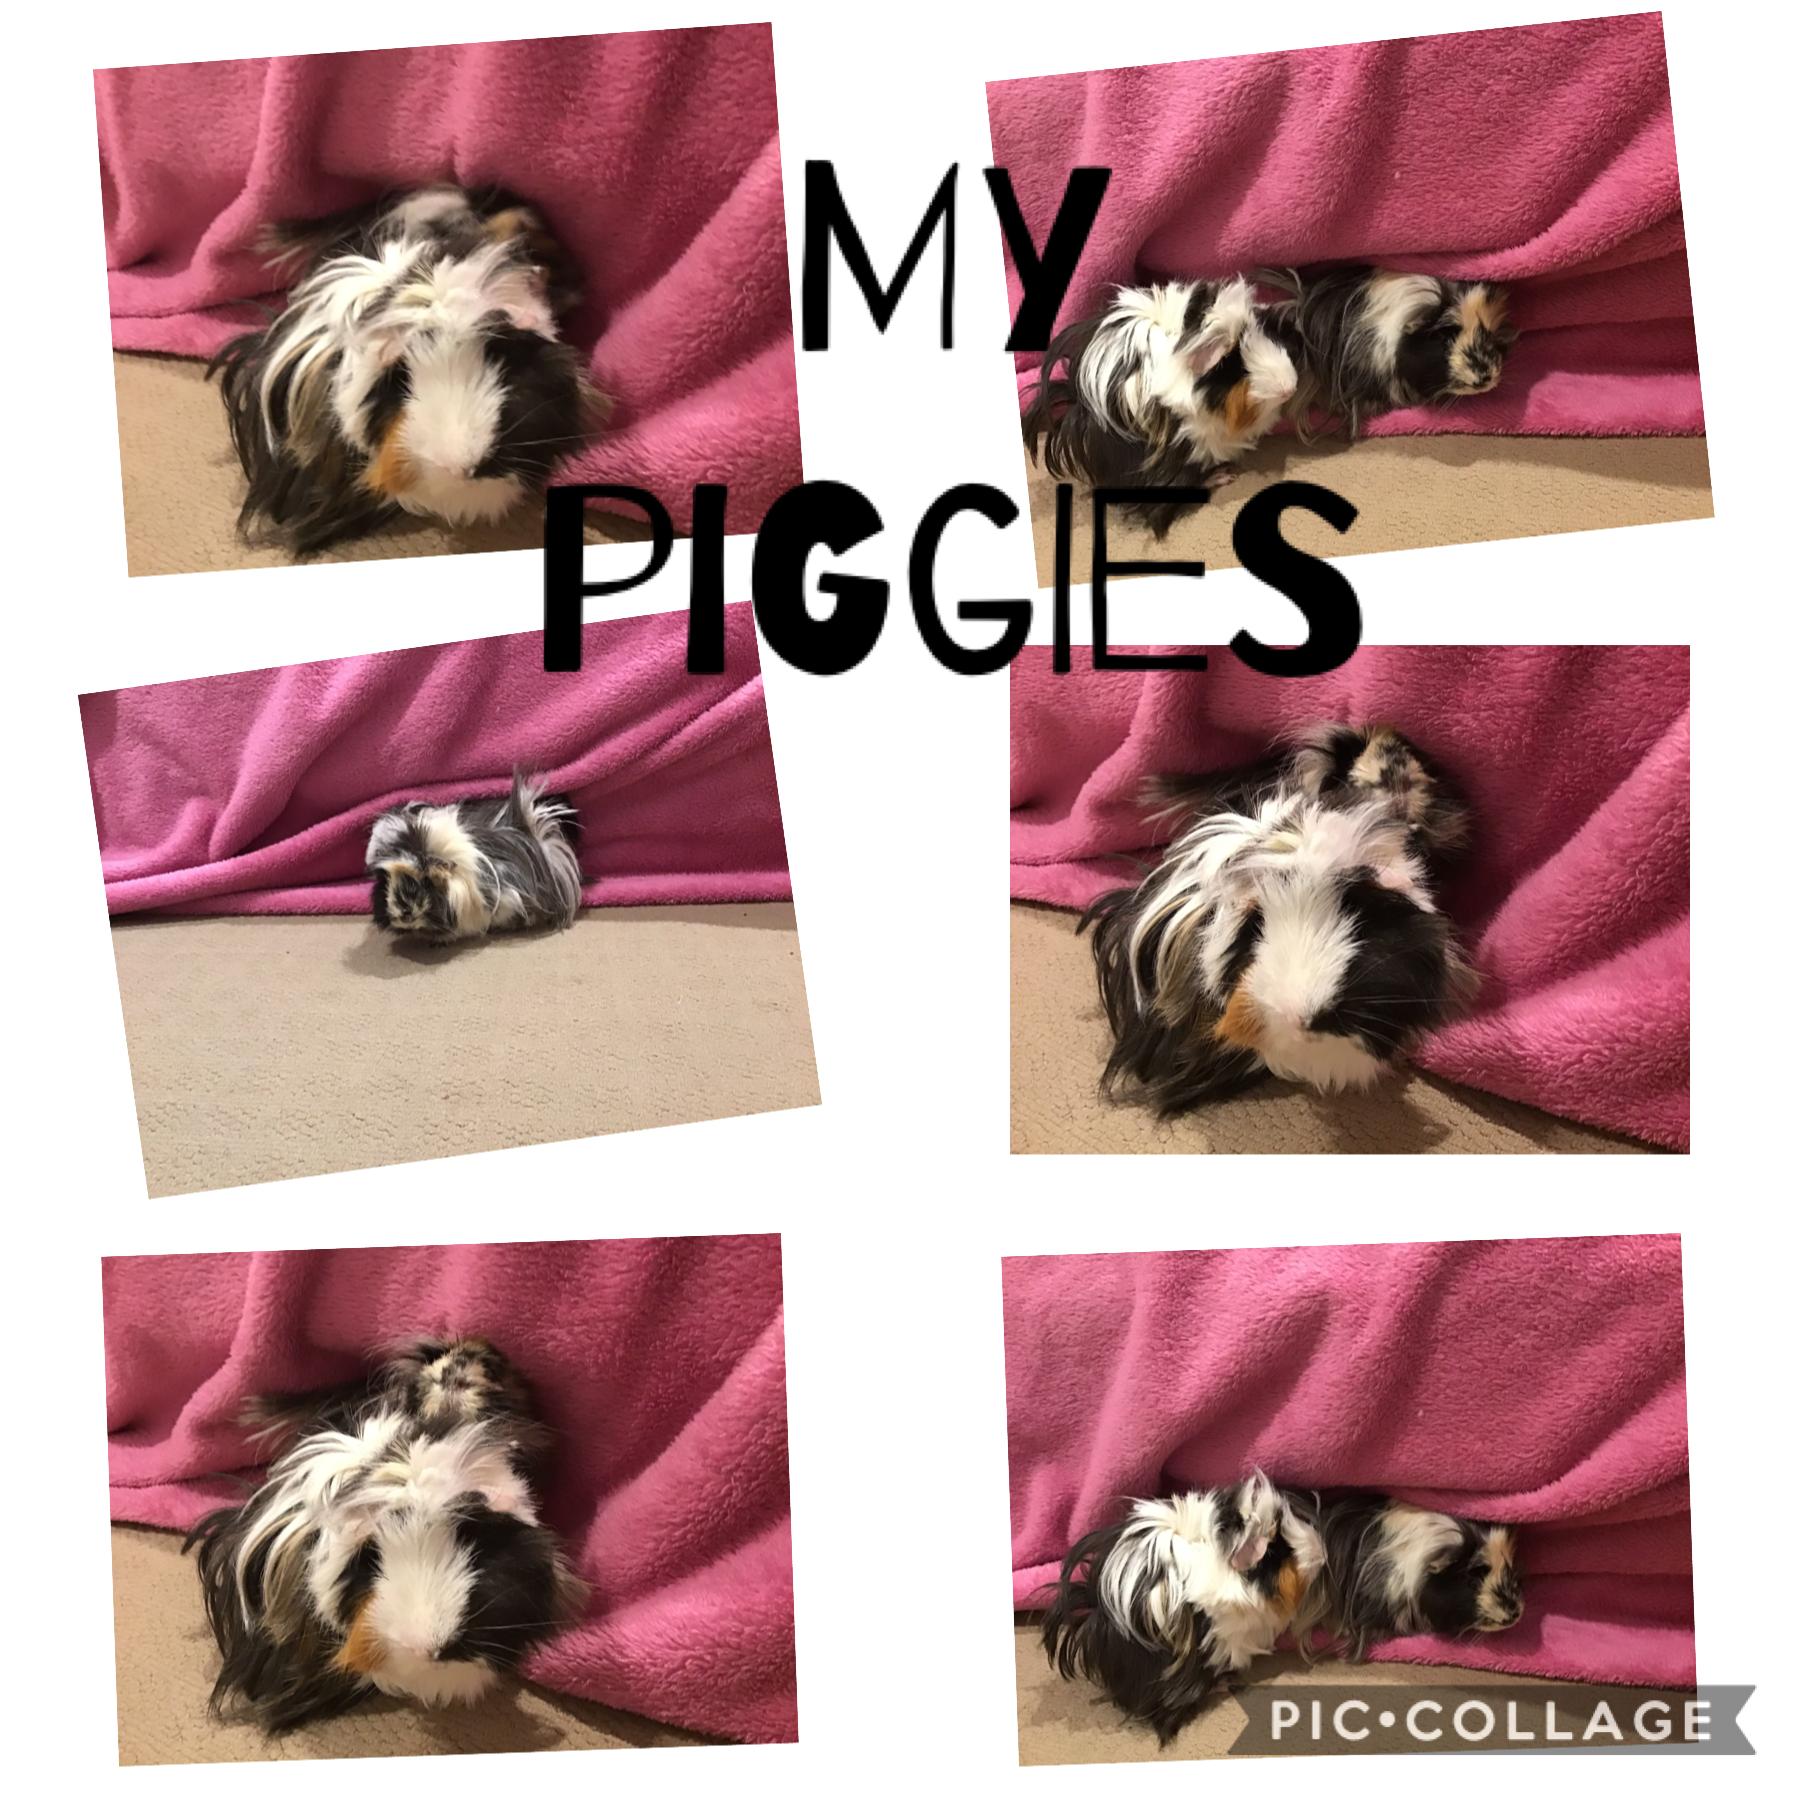 Pigggggggies